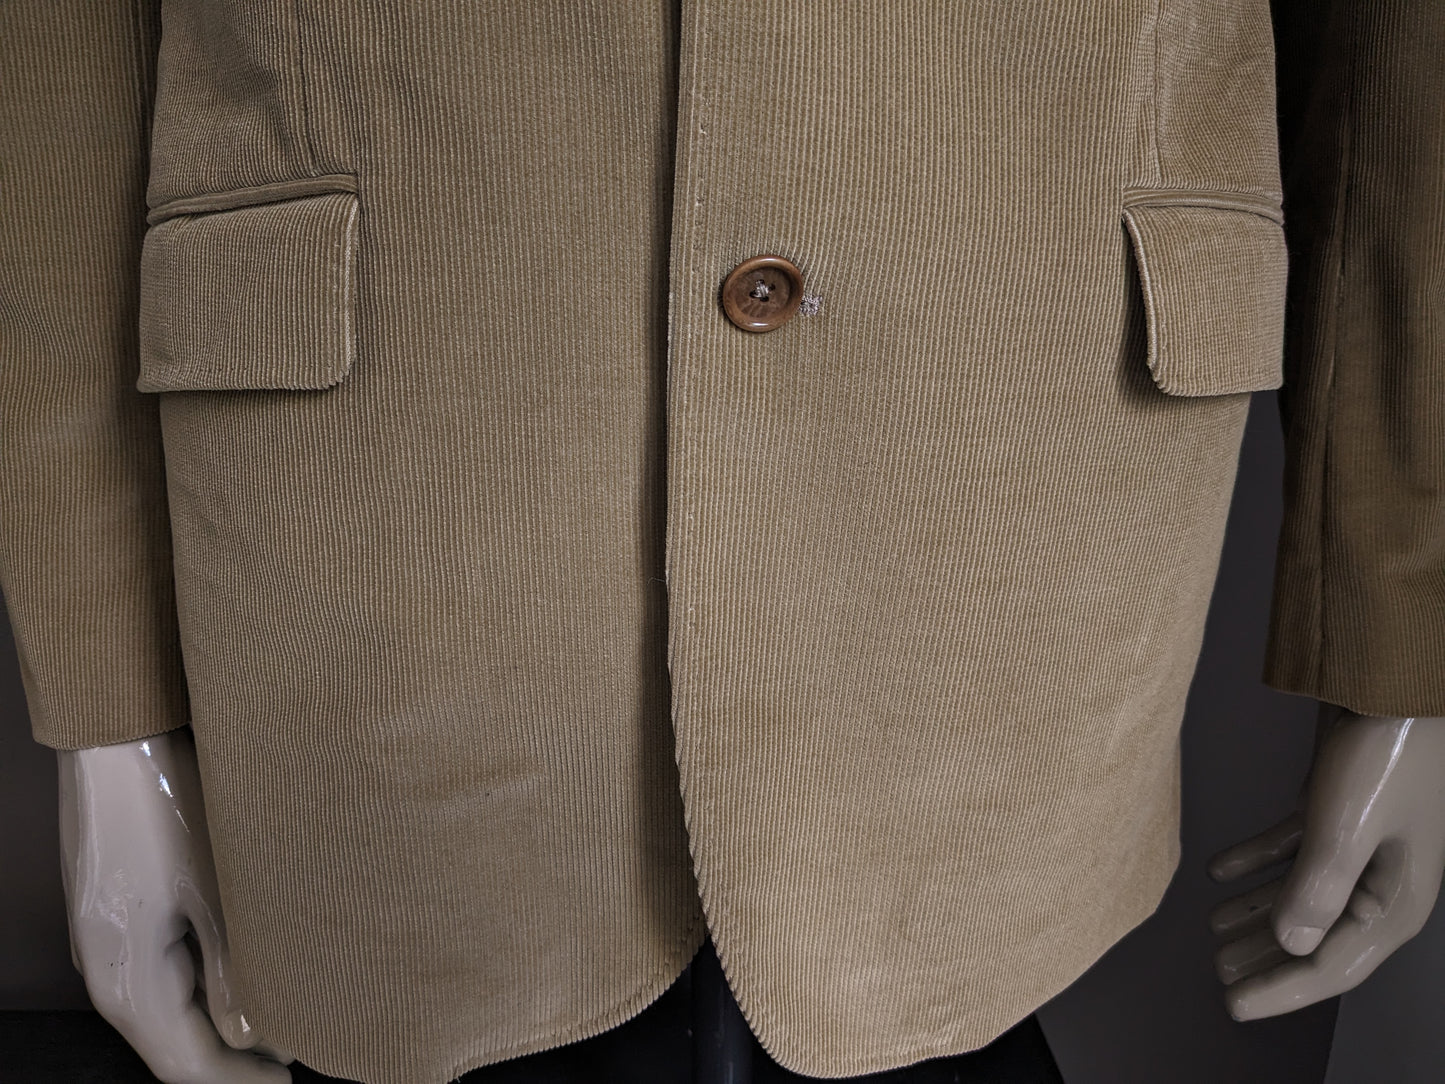 Massimo Dutti CIB Jacket. Color marrón claro. Tamaño 50 / M.